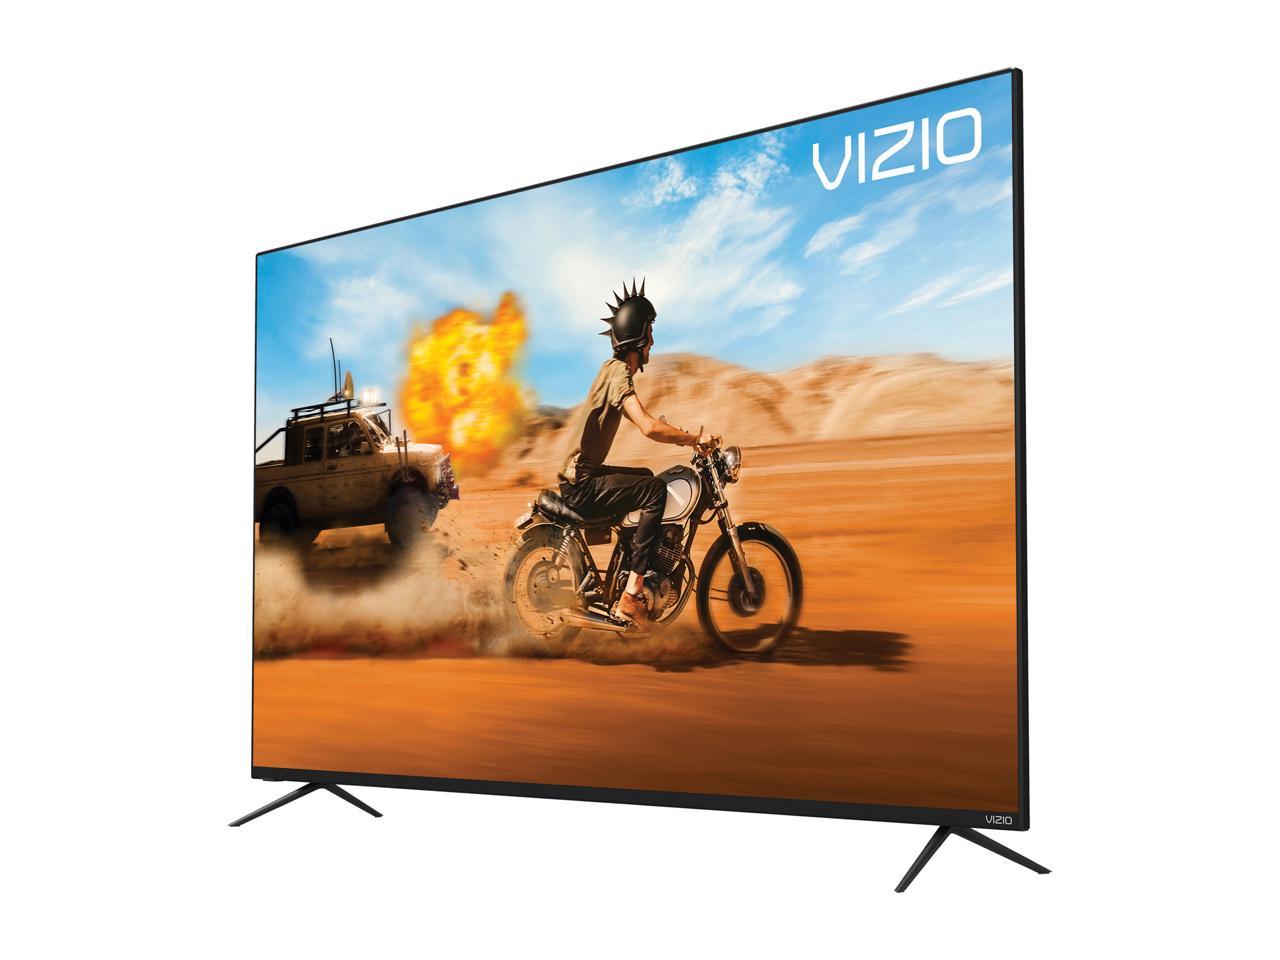 VIZIO Mseries Quantum 55" Class 4K HDR Smart LED TV M557G0 (2019)  eBay